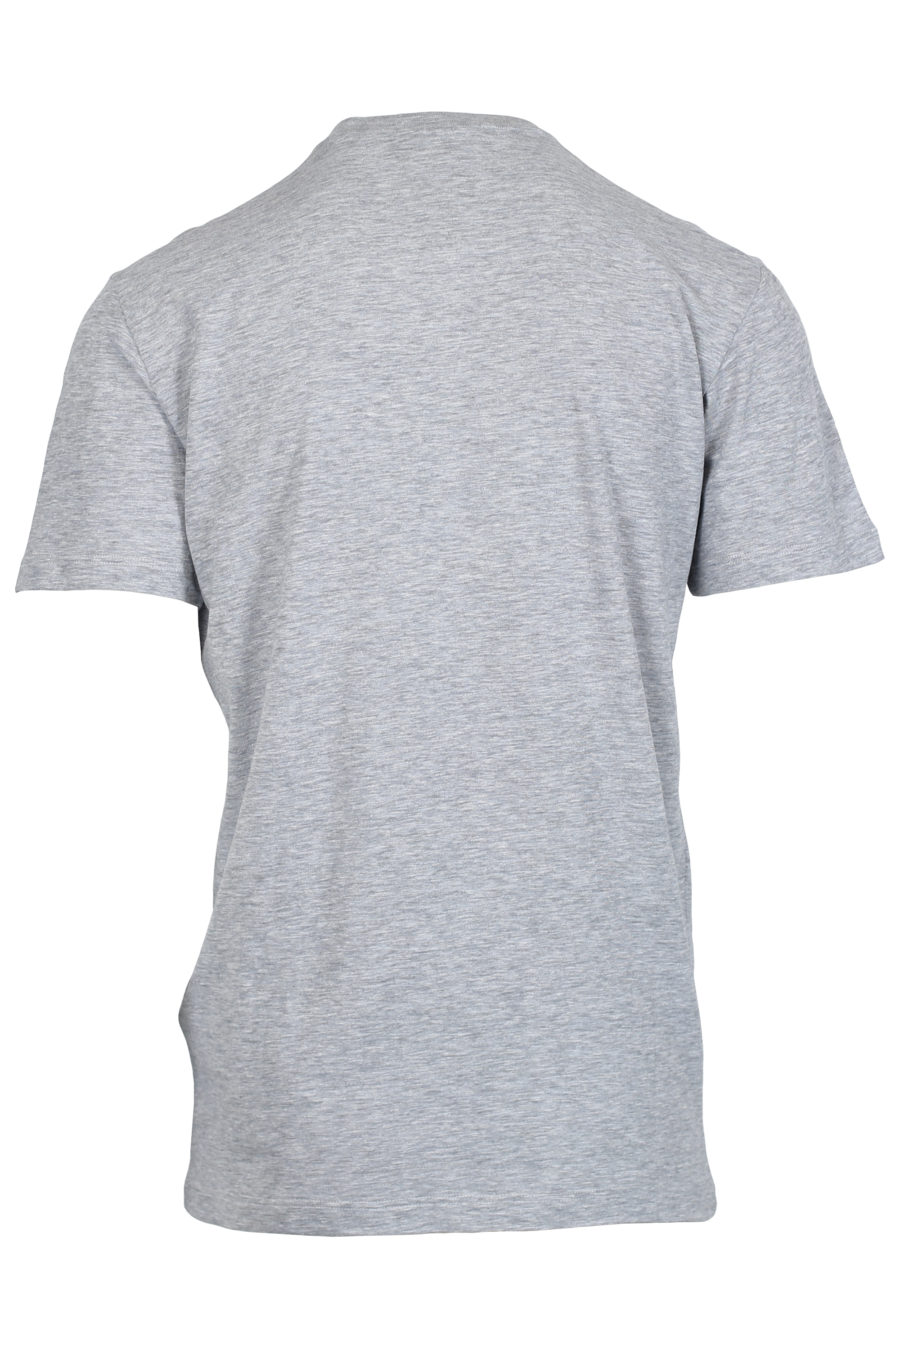 Graues T-Shirt mit Flaggenaufdruck - IMG 2387